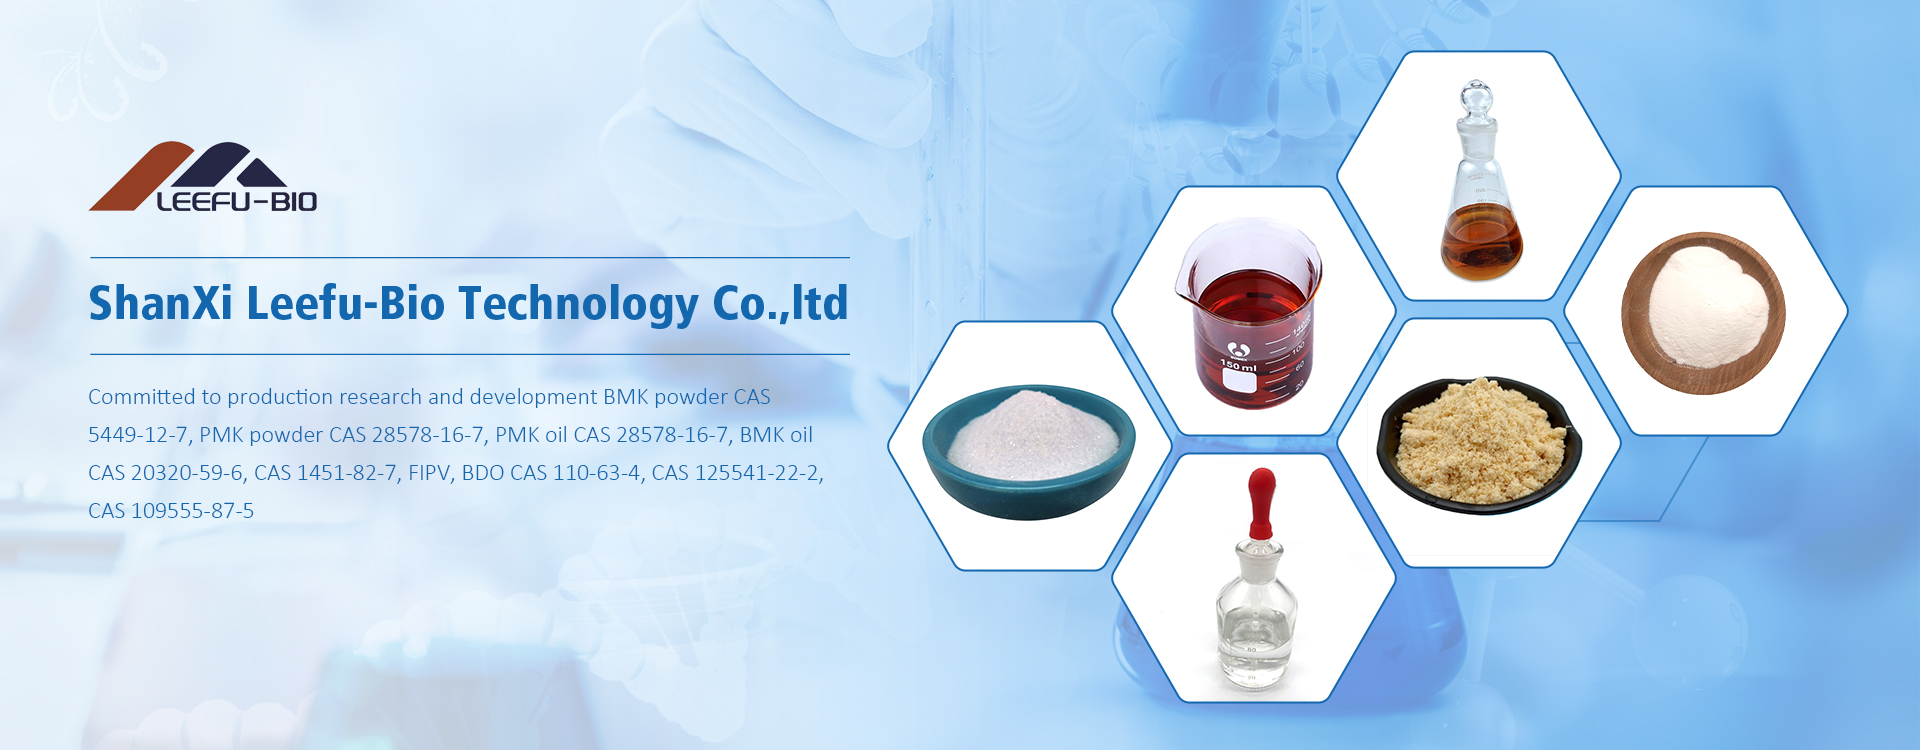 ShanXi Leefu-Bio Technology Co., Ltd.